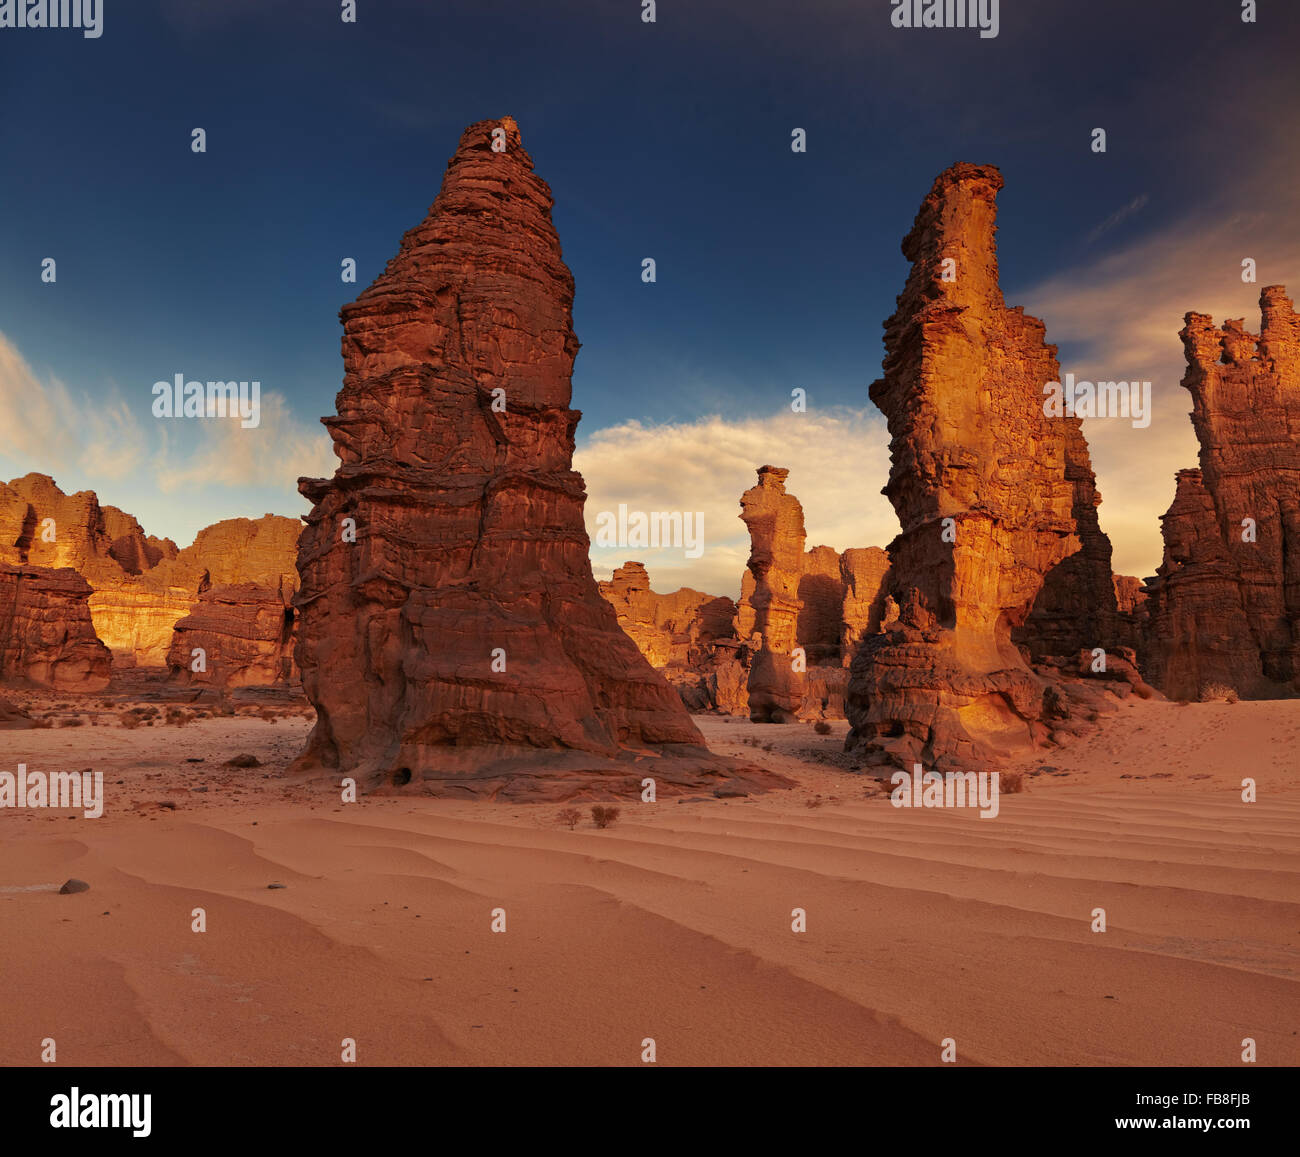 Las rocas del desierto del Sahara, de Tassili N'Ajjer, Argelia Foto de stock